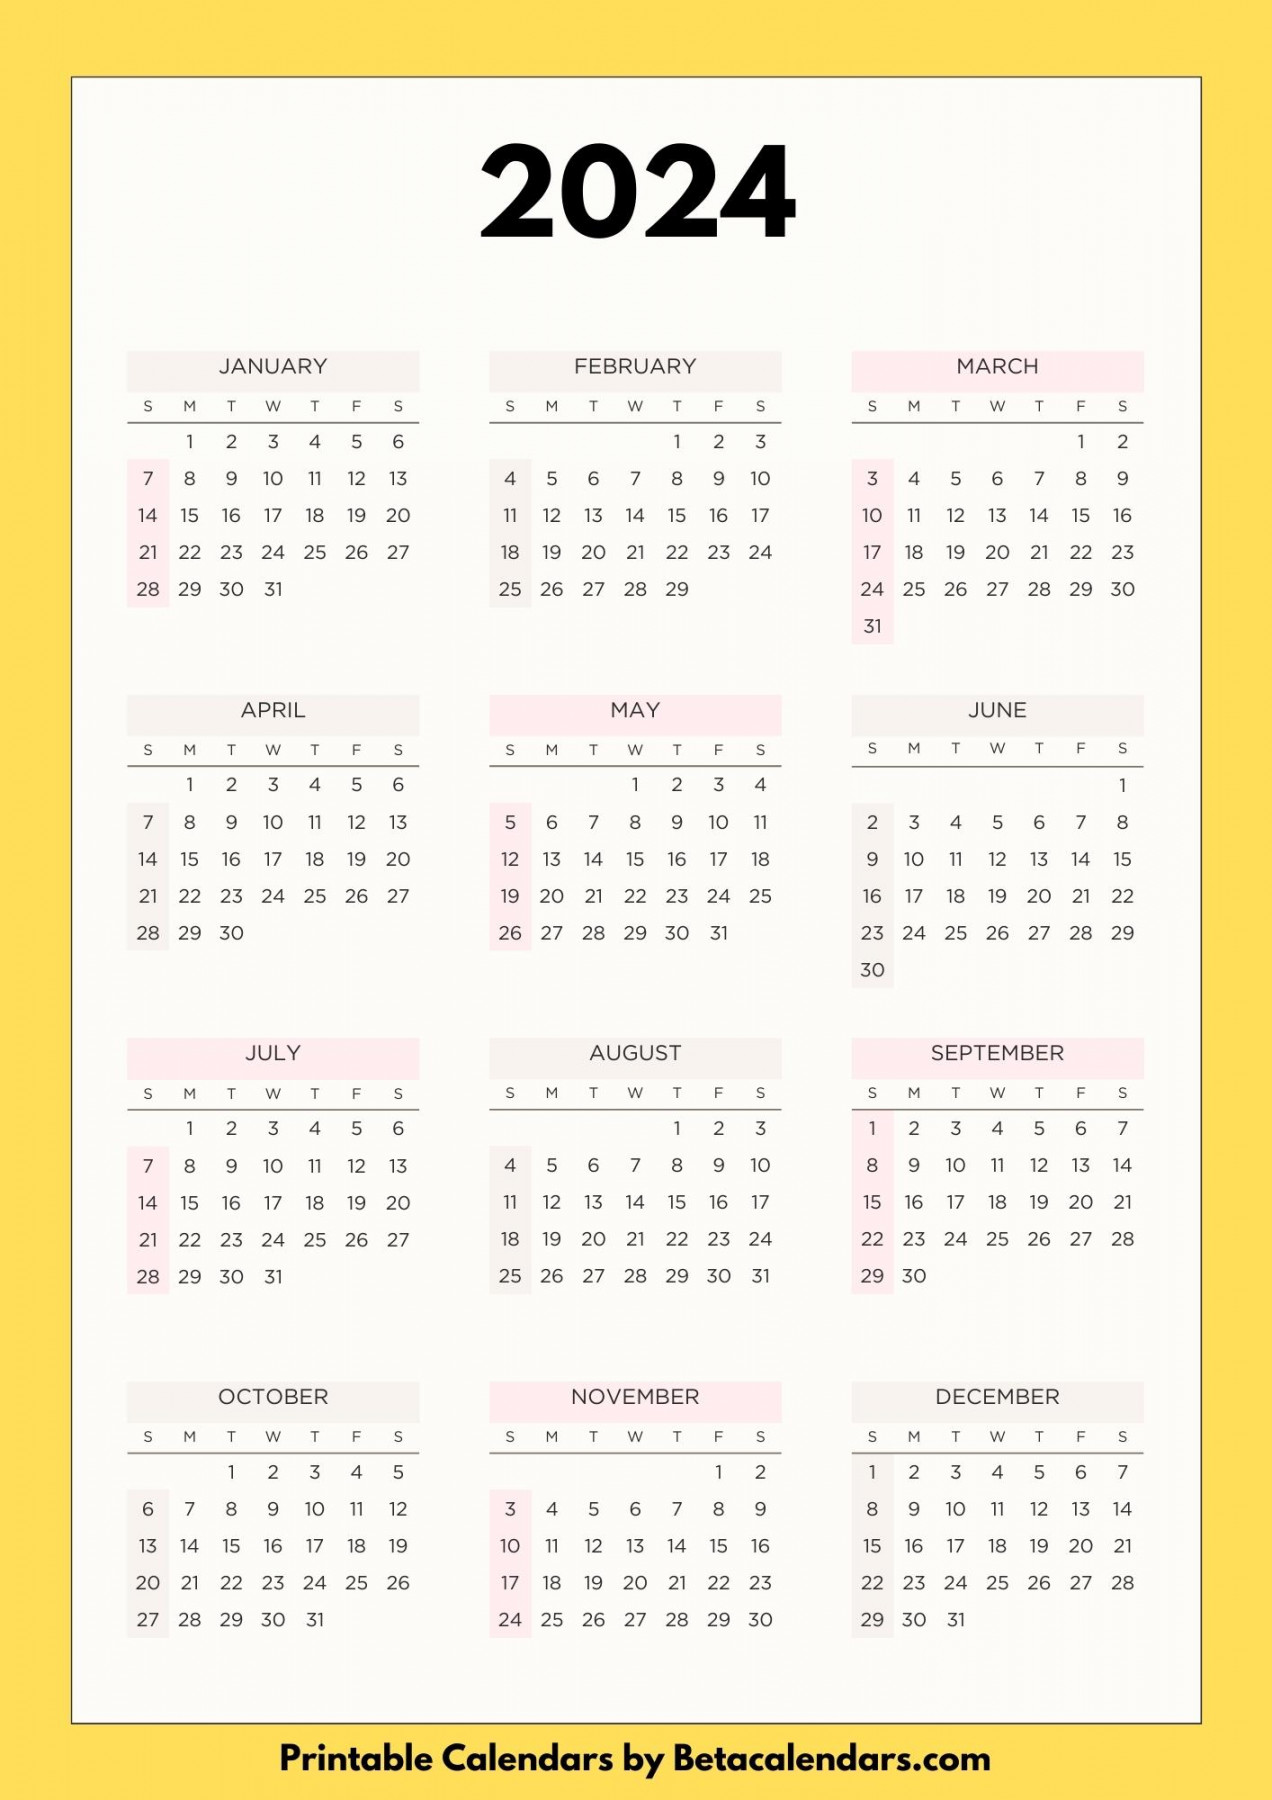 Calendar - Beta Calendars